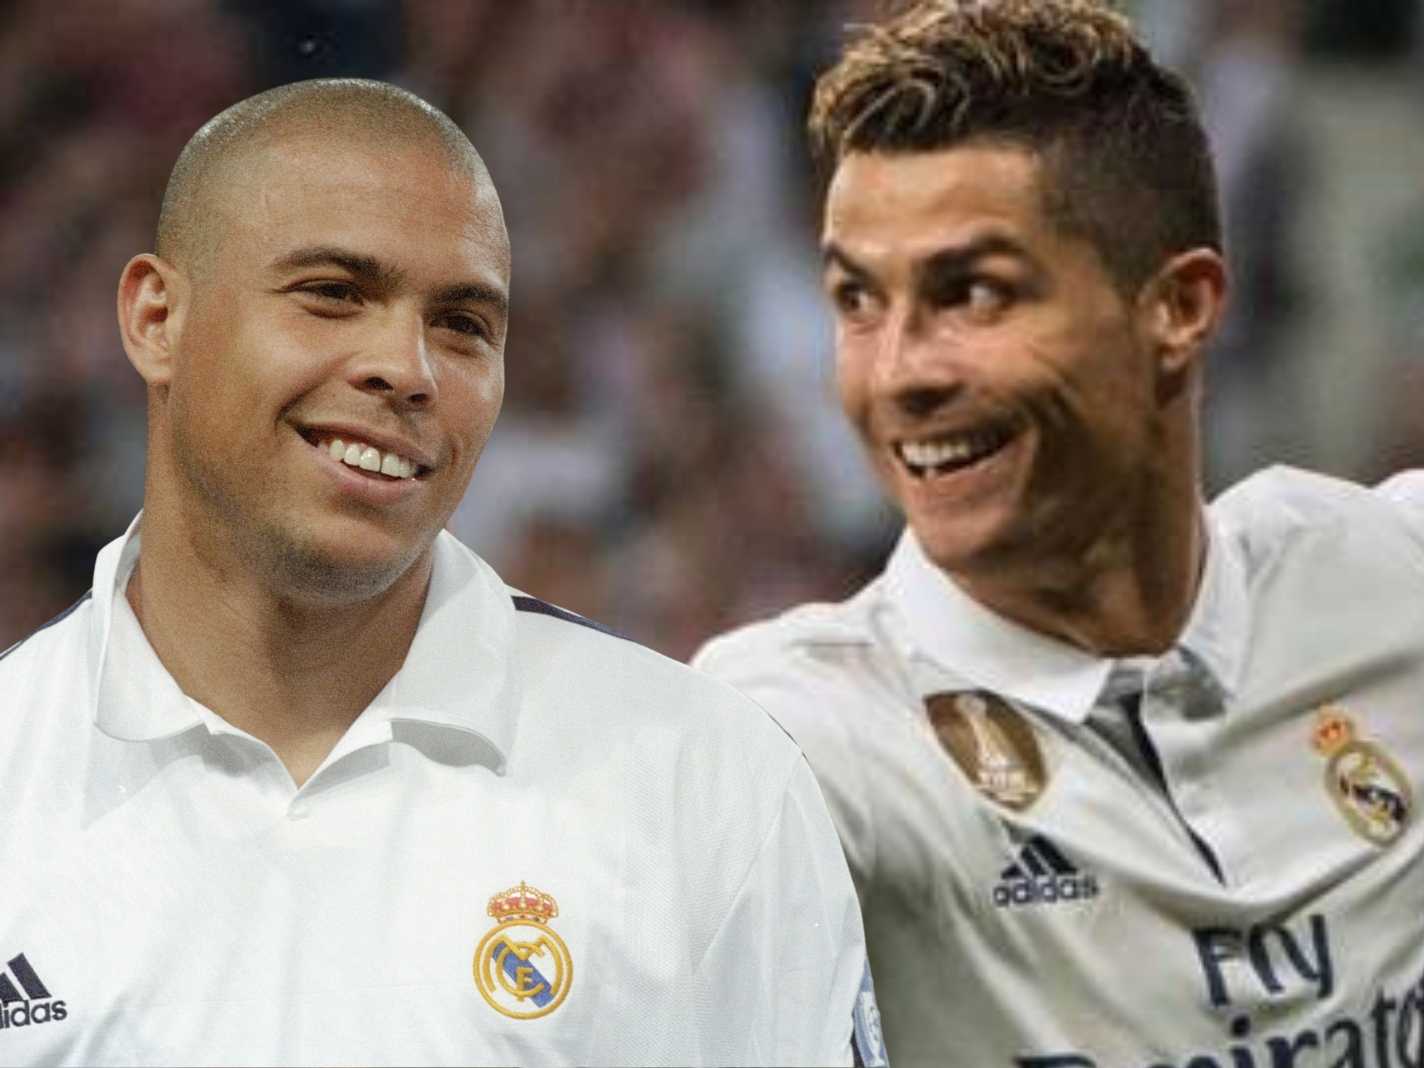 Ronaldo Nazario and Cristiano Ronaldo